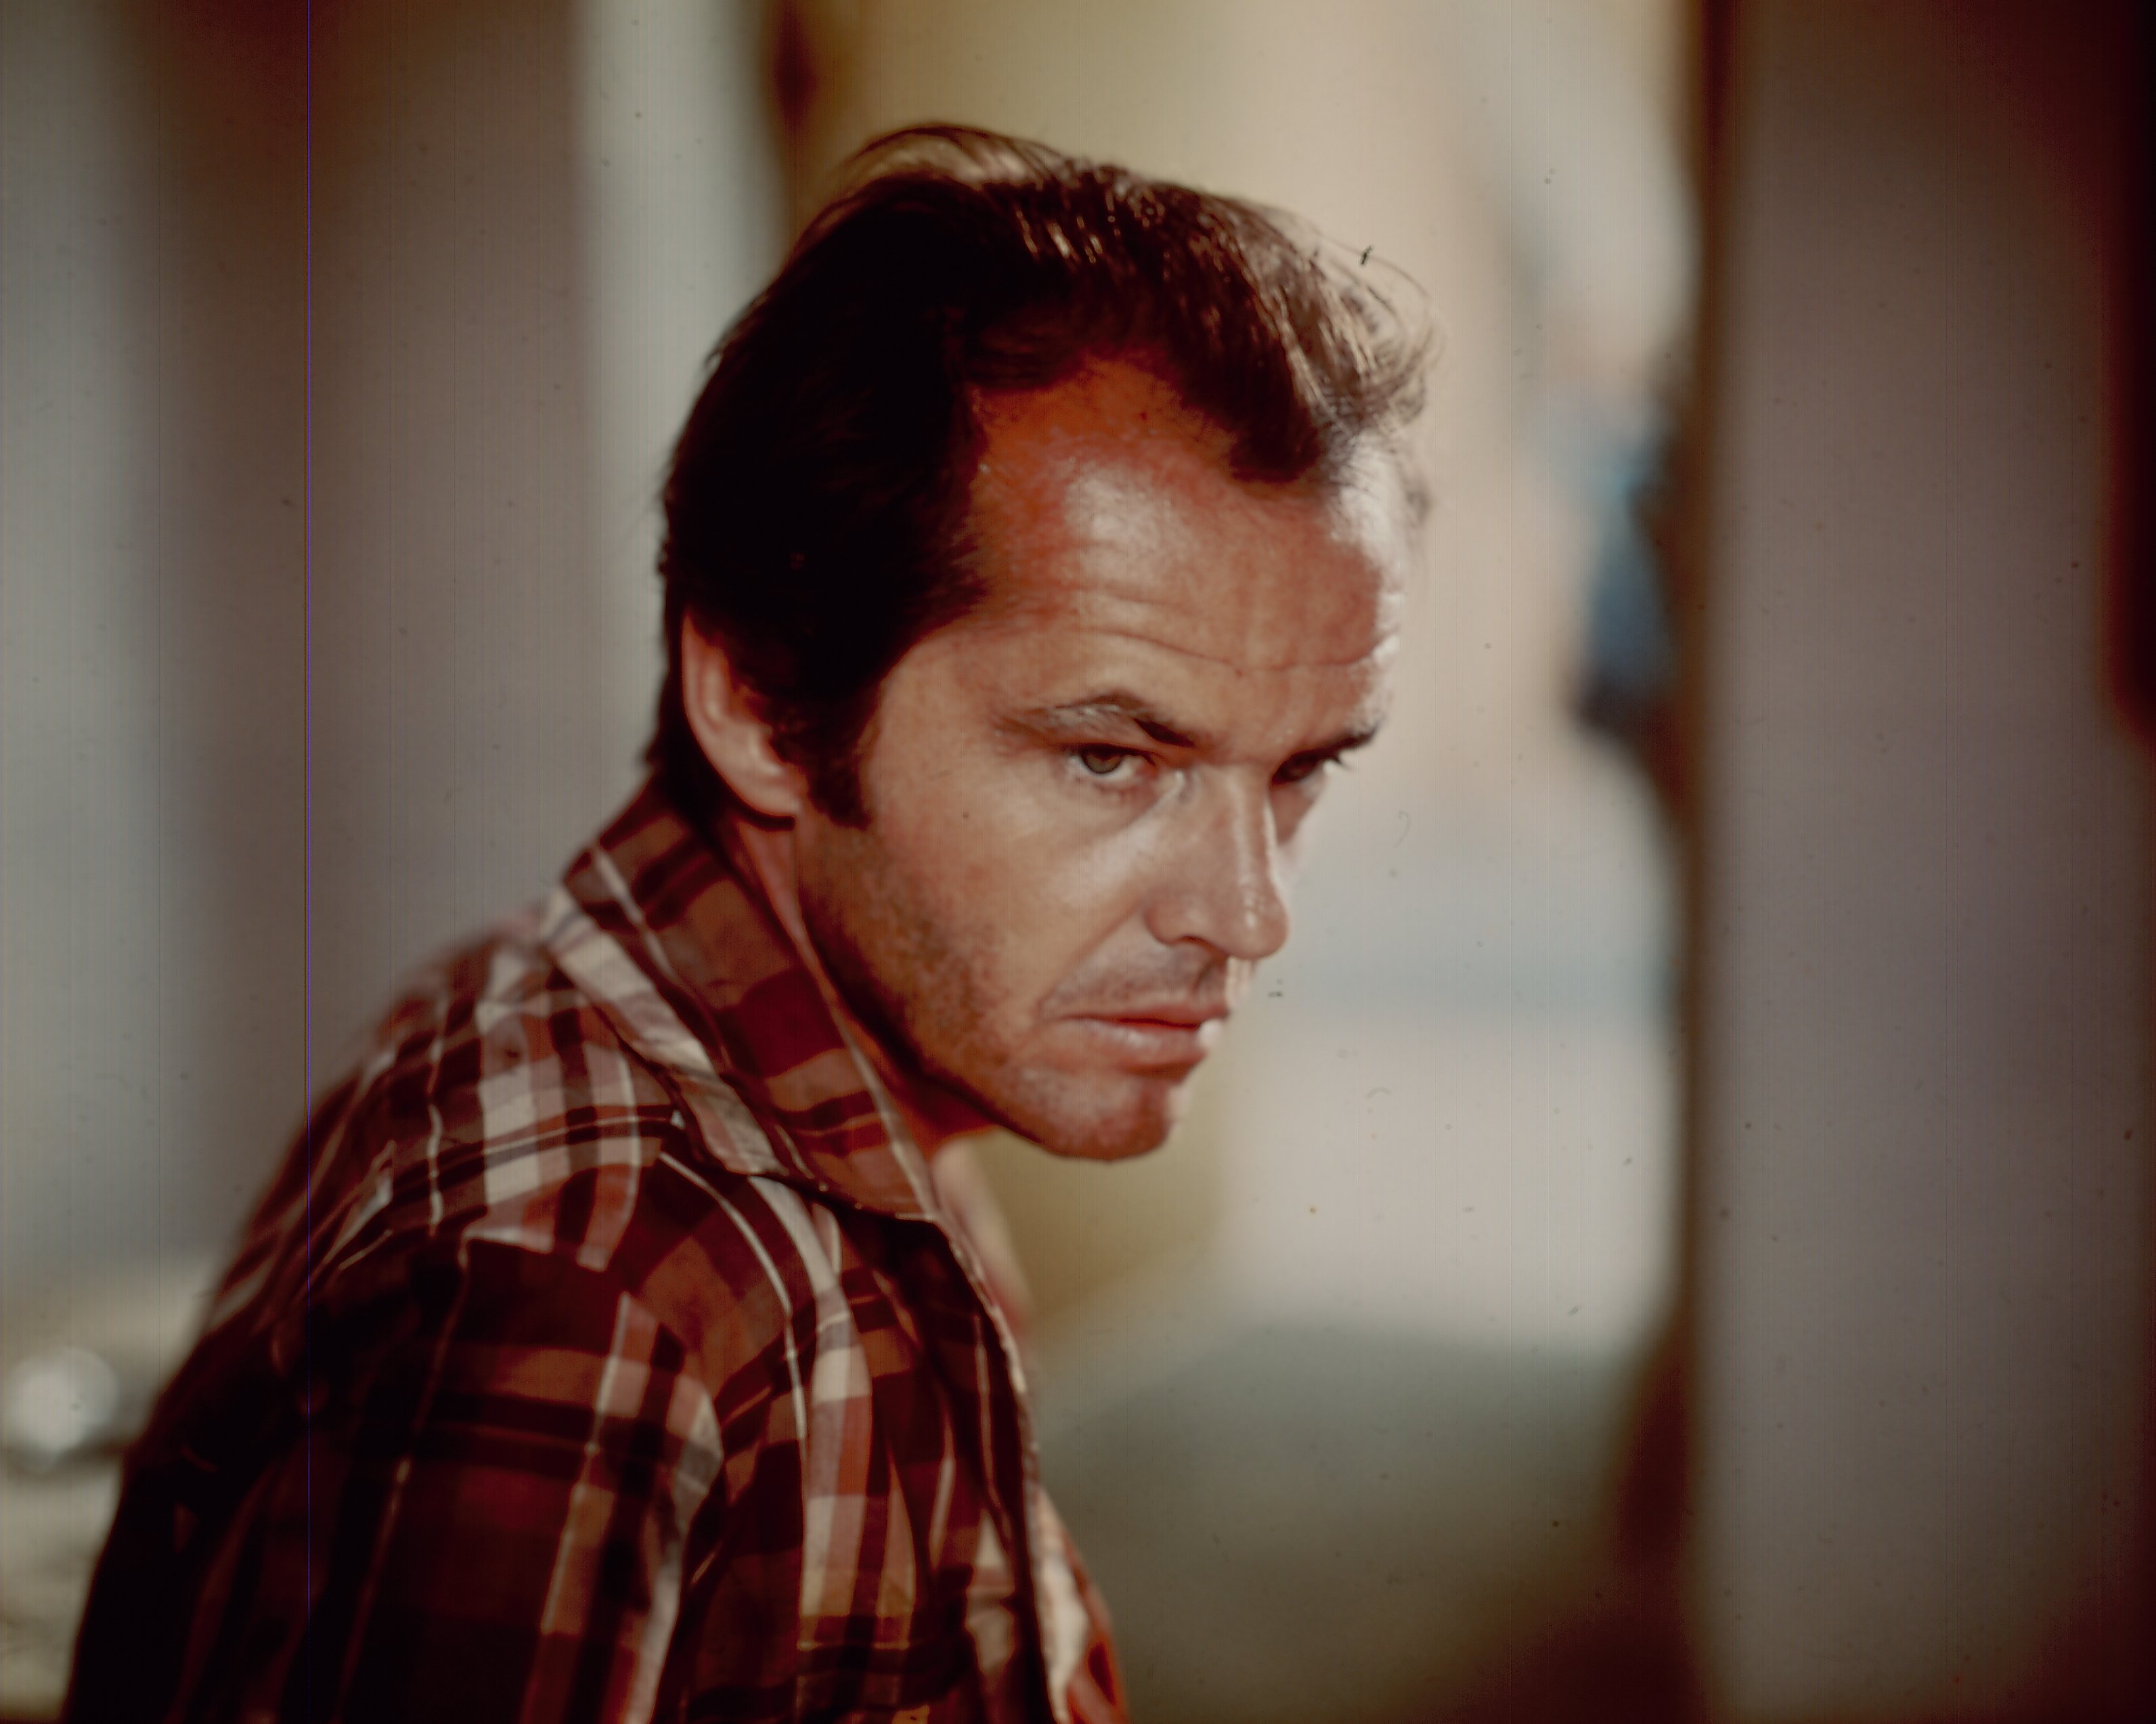 Jack Nicholson en una escena de la película "The Passenger", 1975. | Foto: Getty Images 